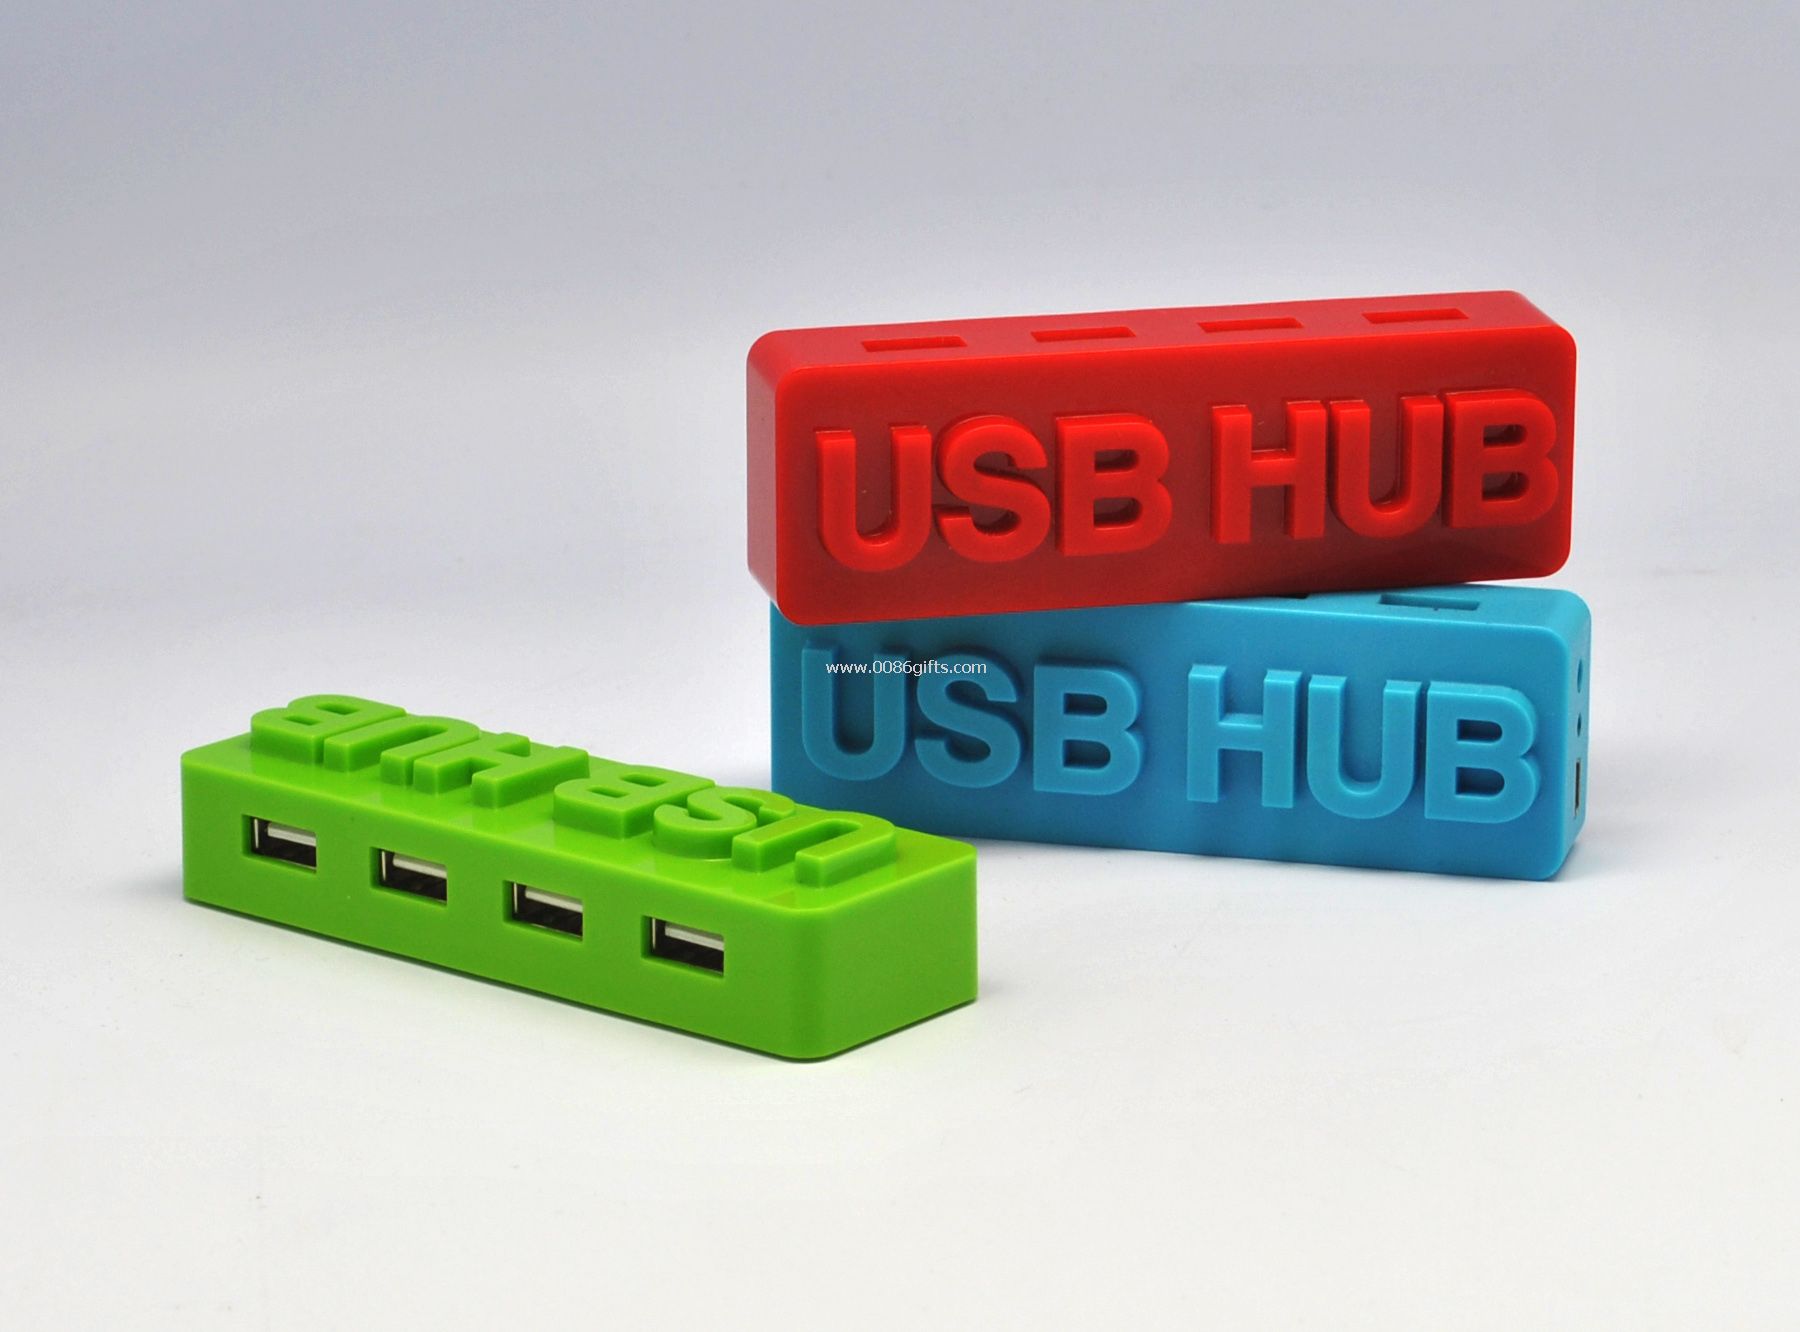 USB-huber